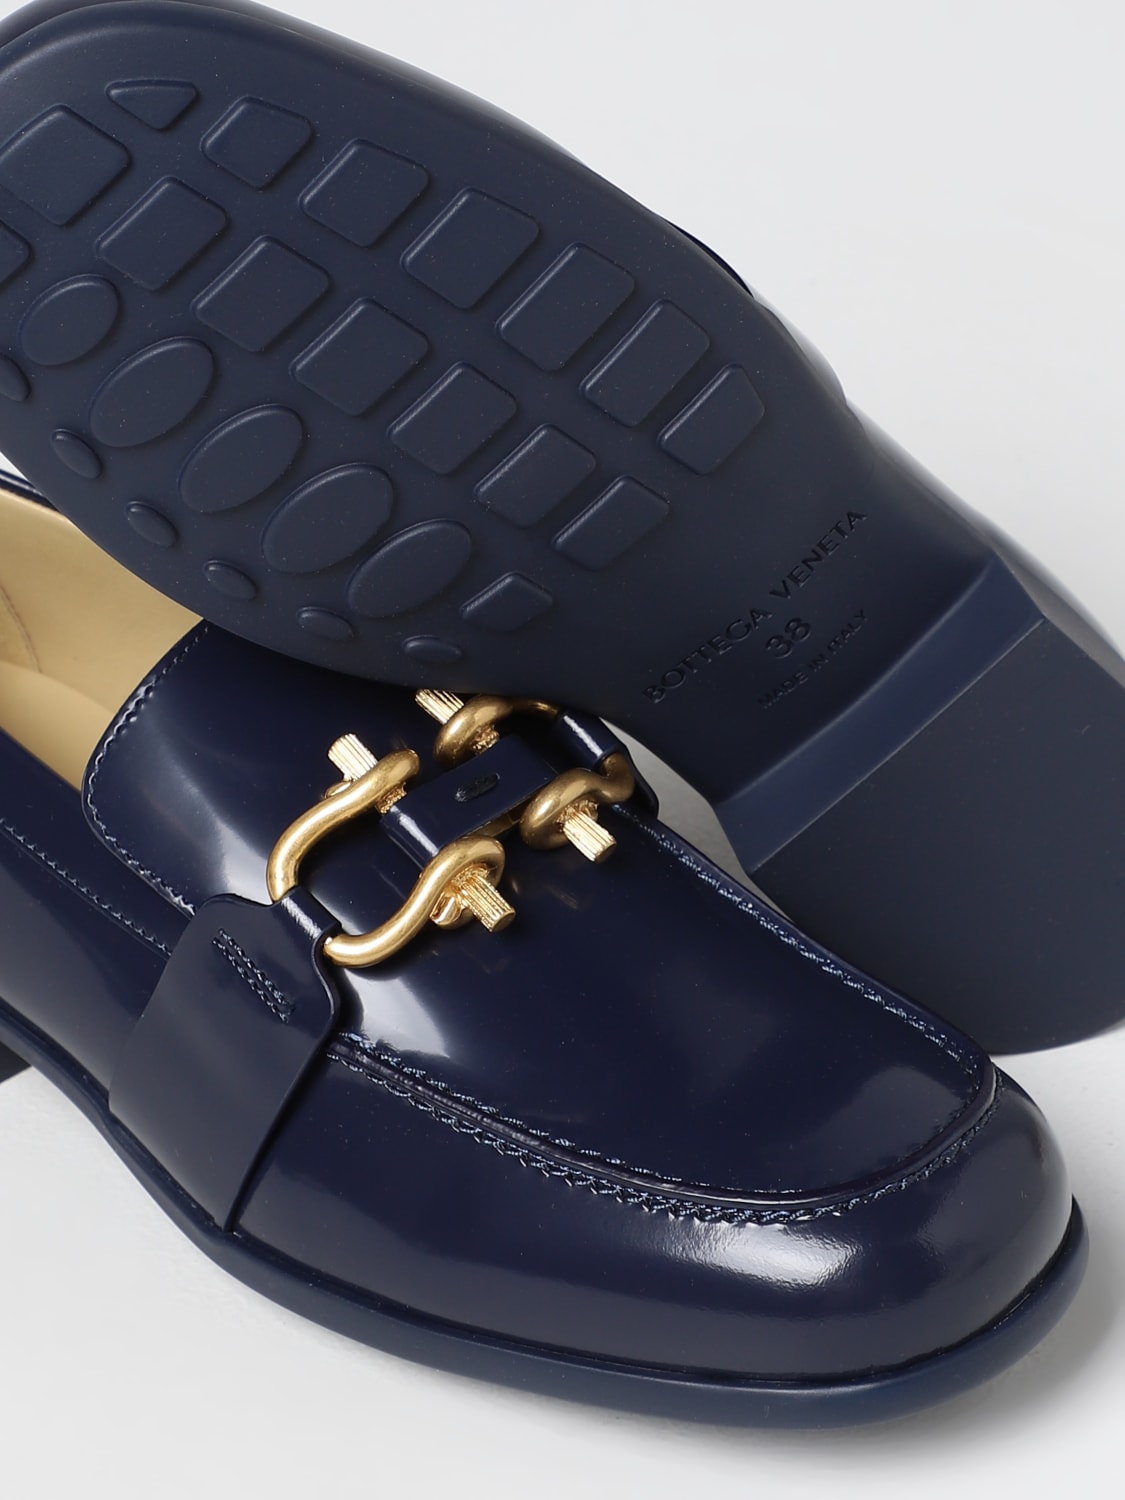 vasketøj Addiction Overgivelse BOTTEGA VENETA: loafers for woman - Blue | Bottega Veneta loafers  708902V28R0 online on GIGLIO.COM